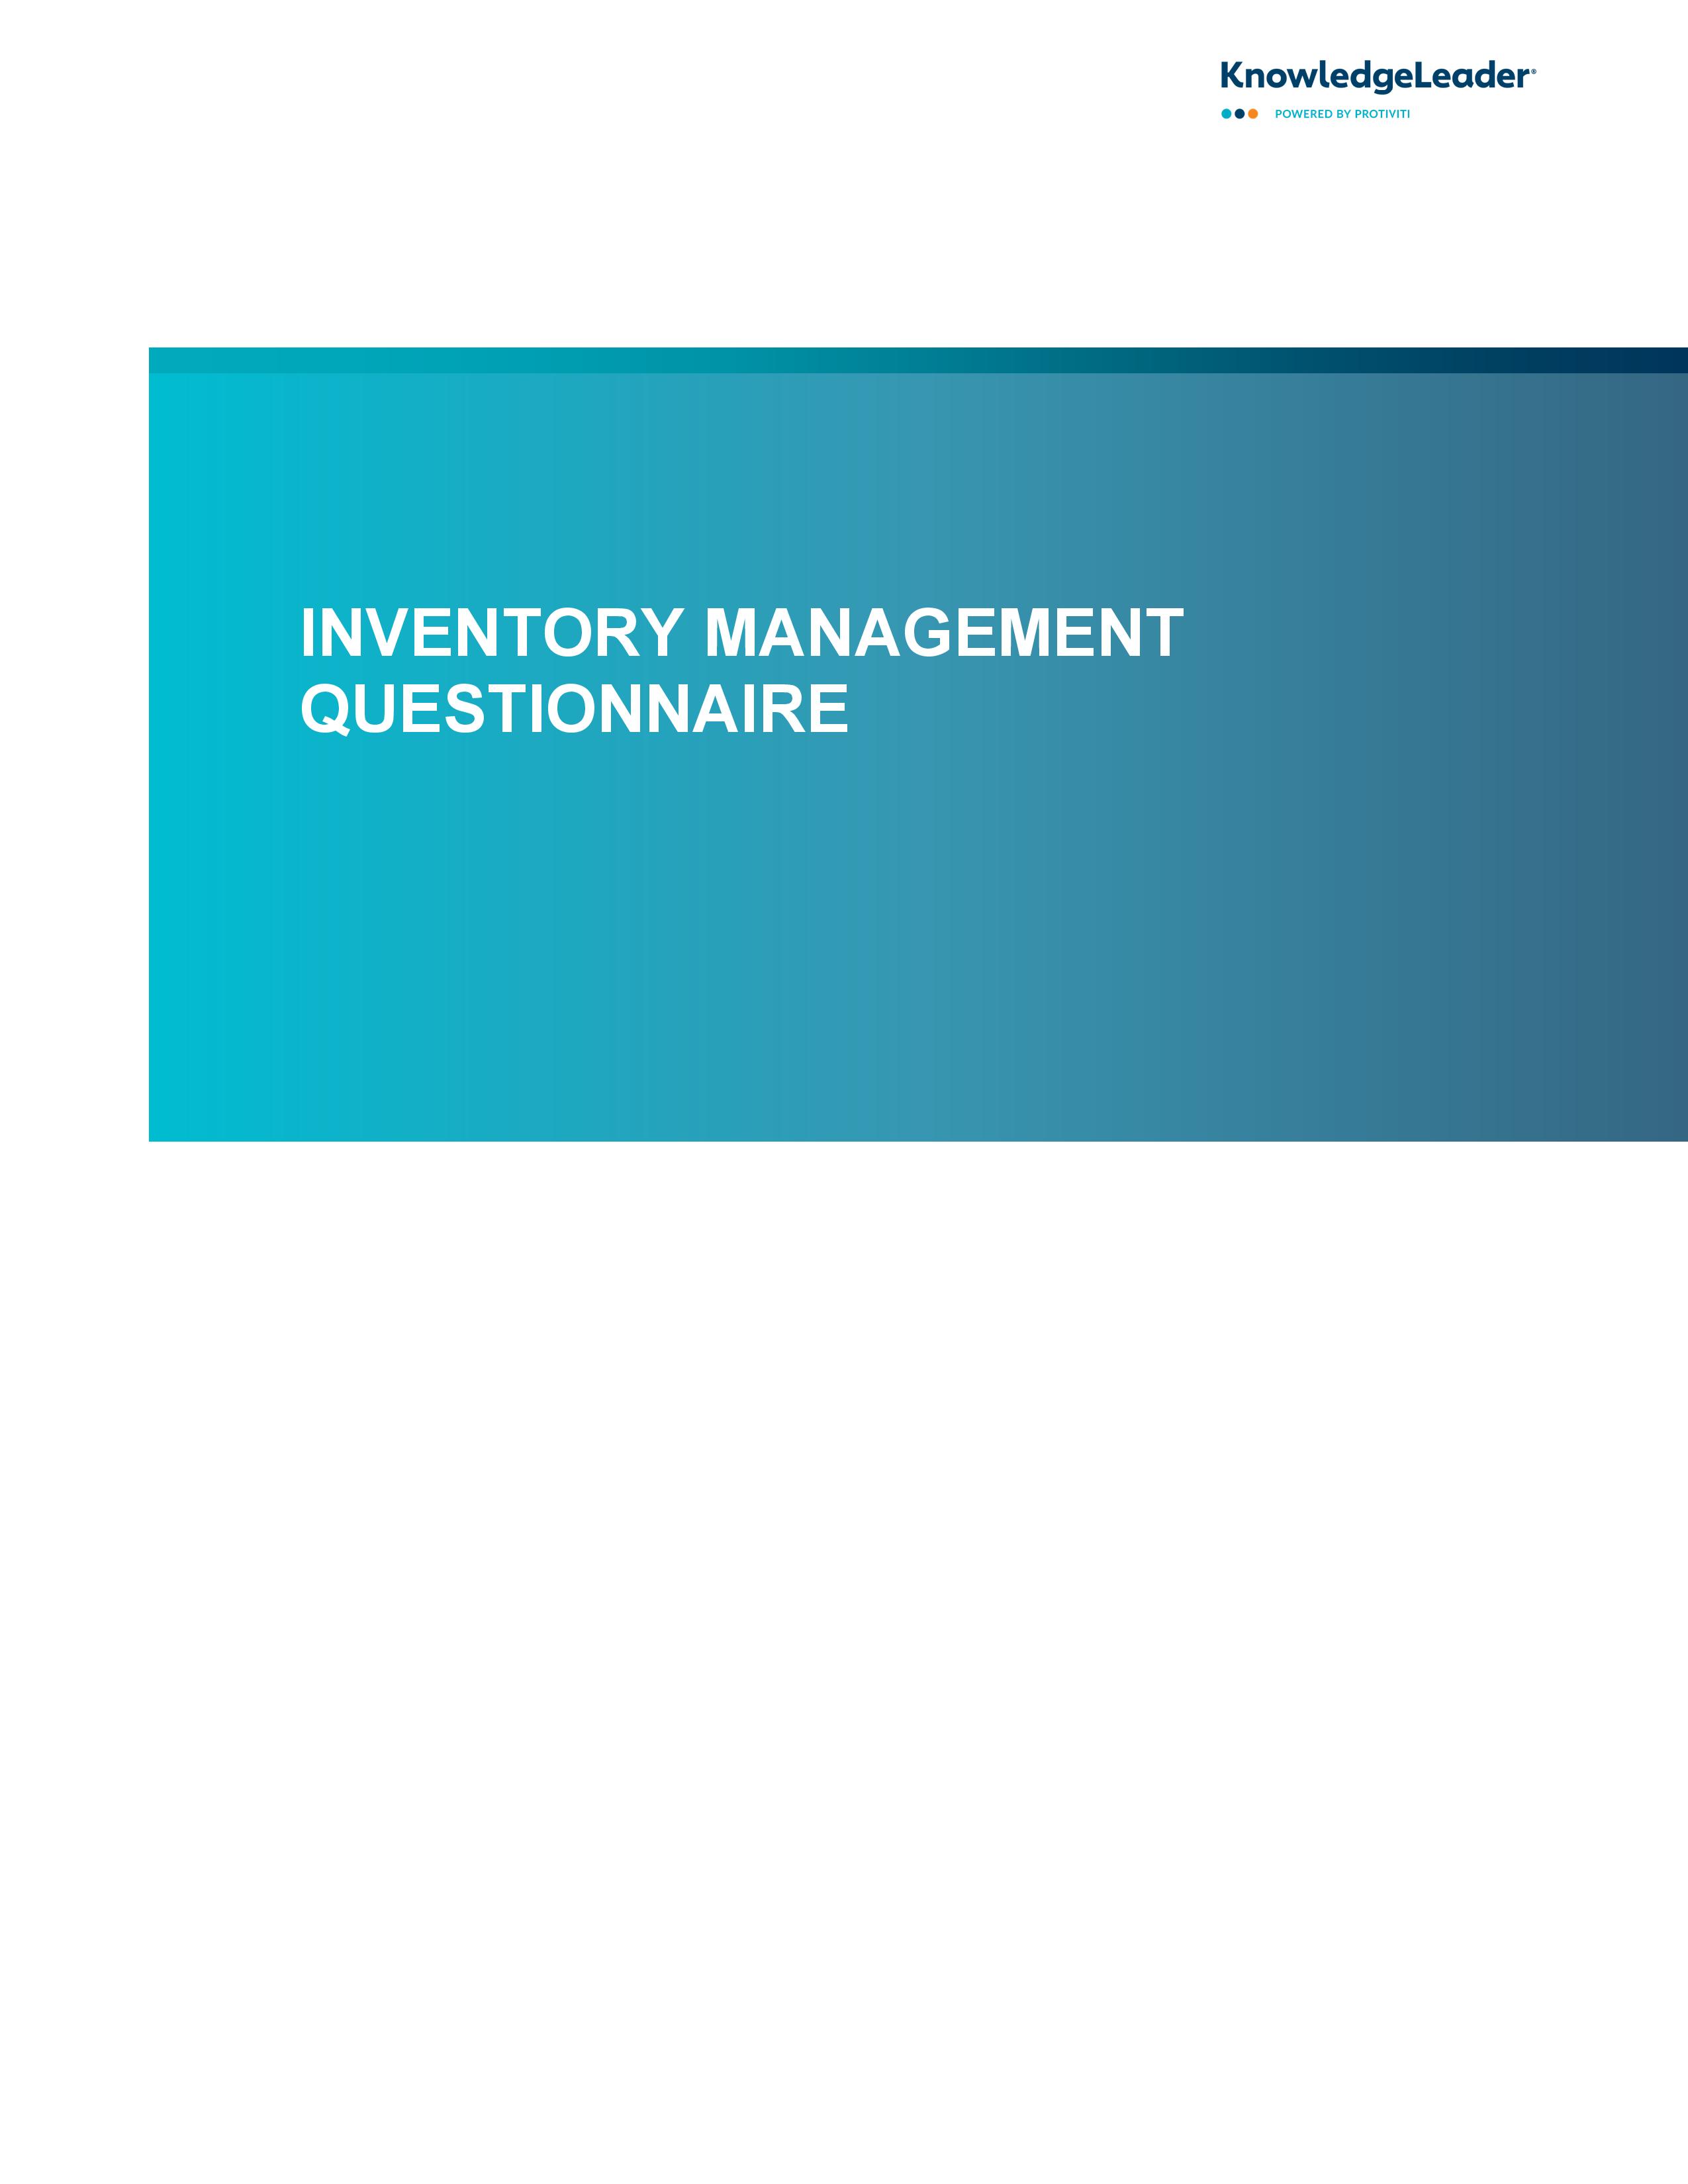 Inventory Management Thumbnail 